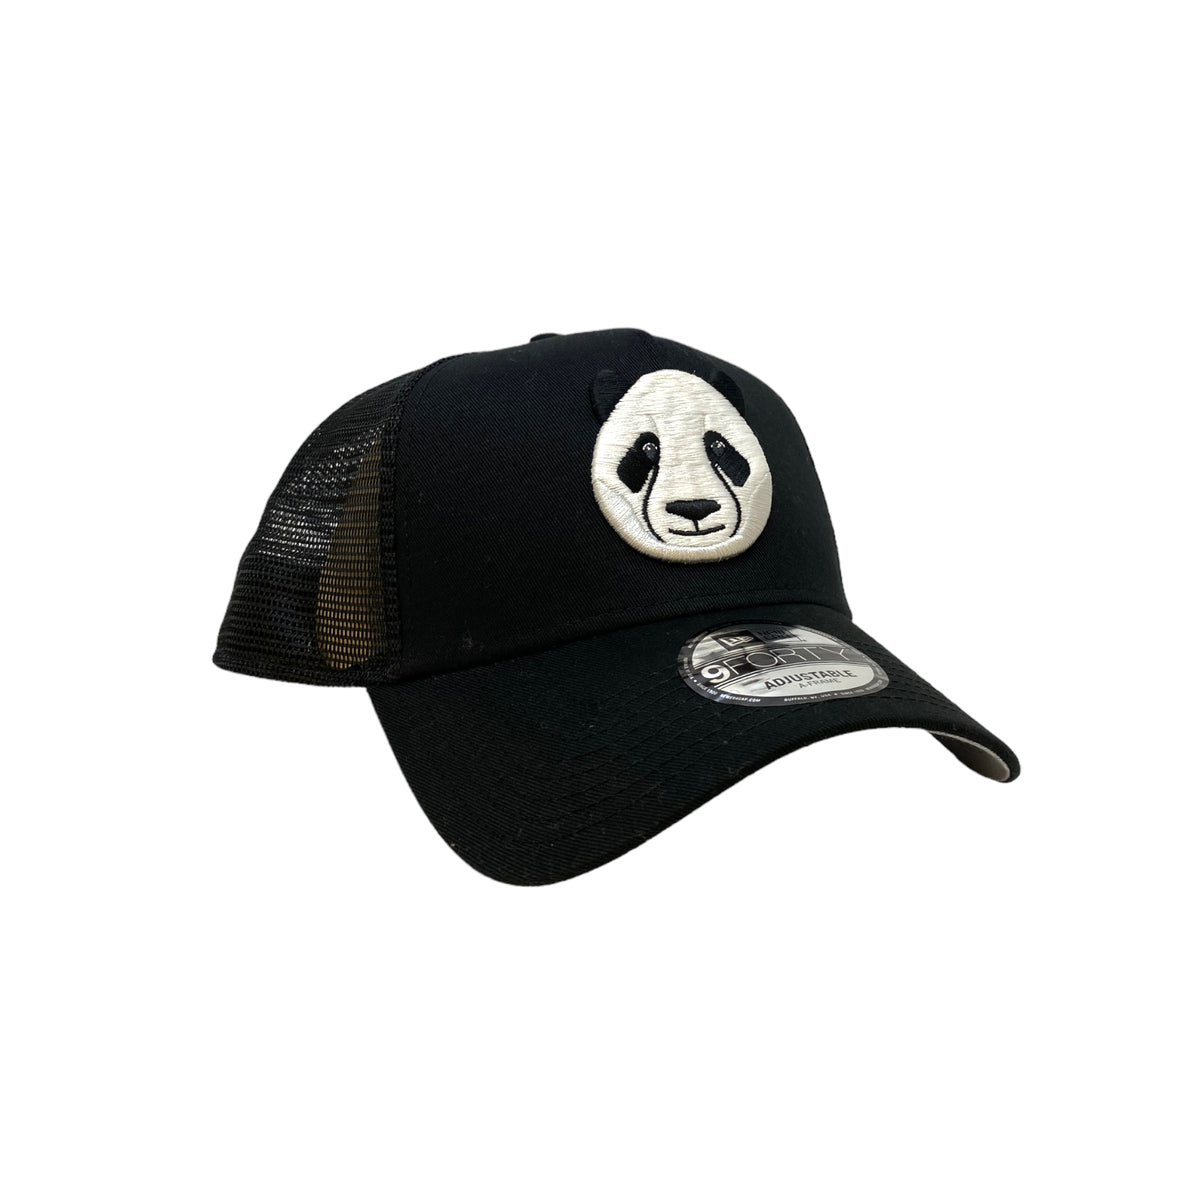 Stylish Panda Trucker Cap - Modern & Breathable